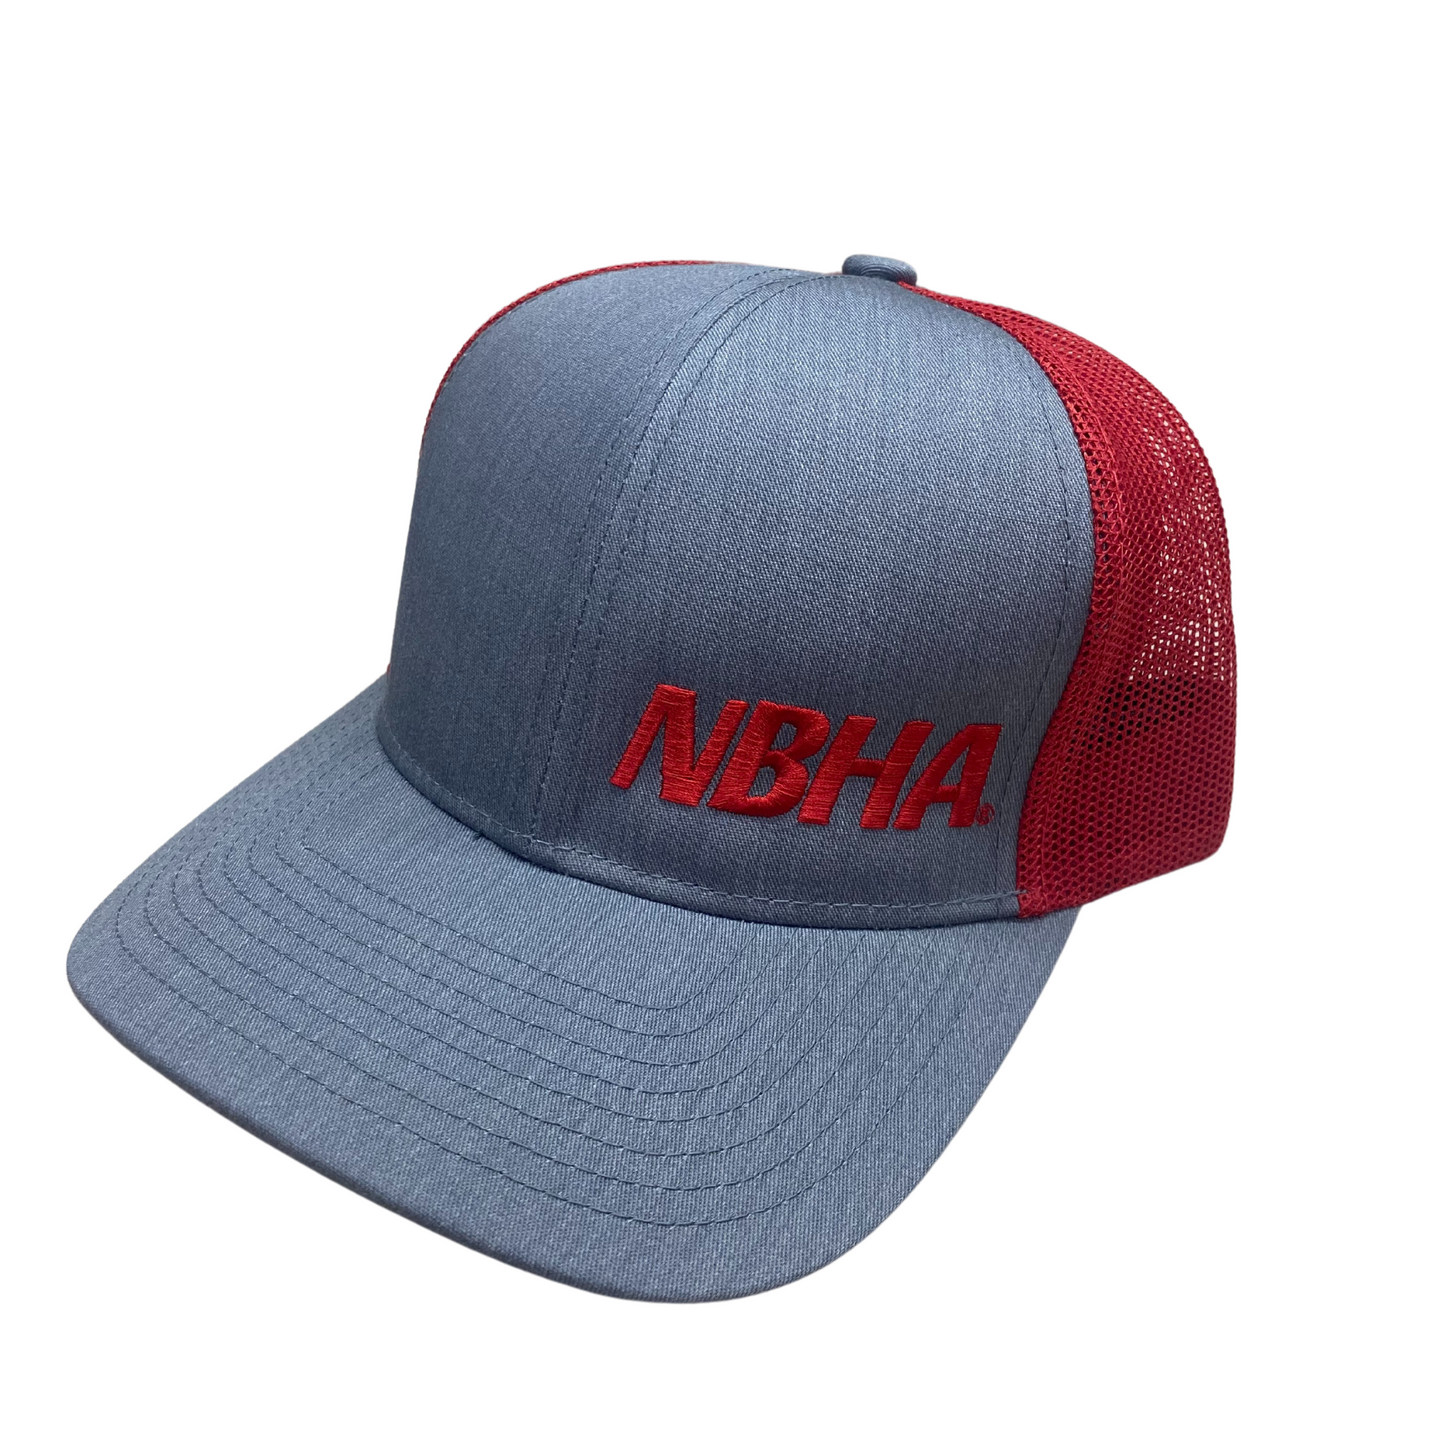 NBHA Trucker Hat : Red/Grey